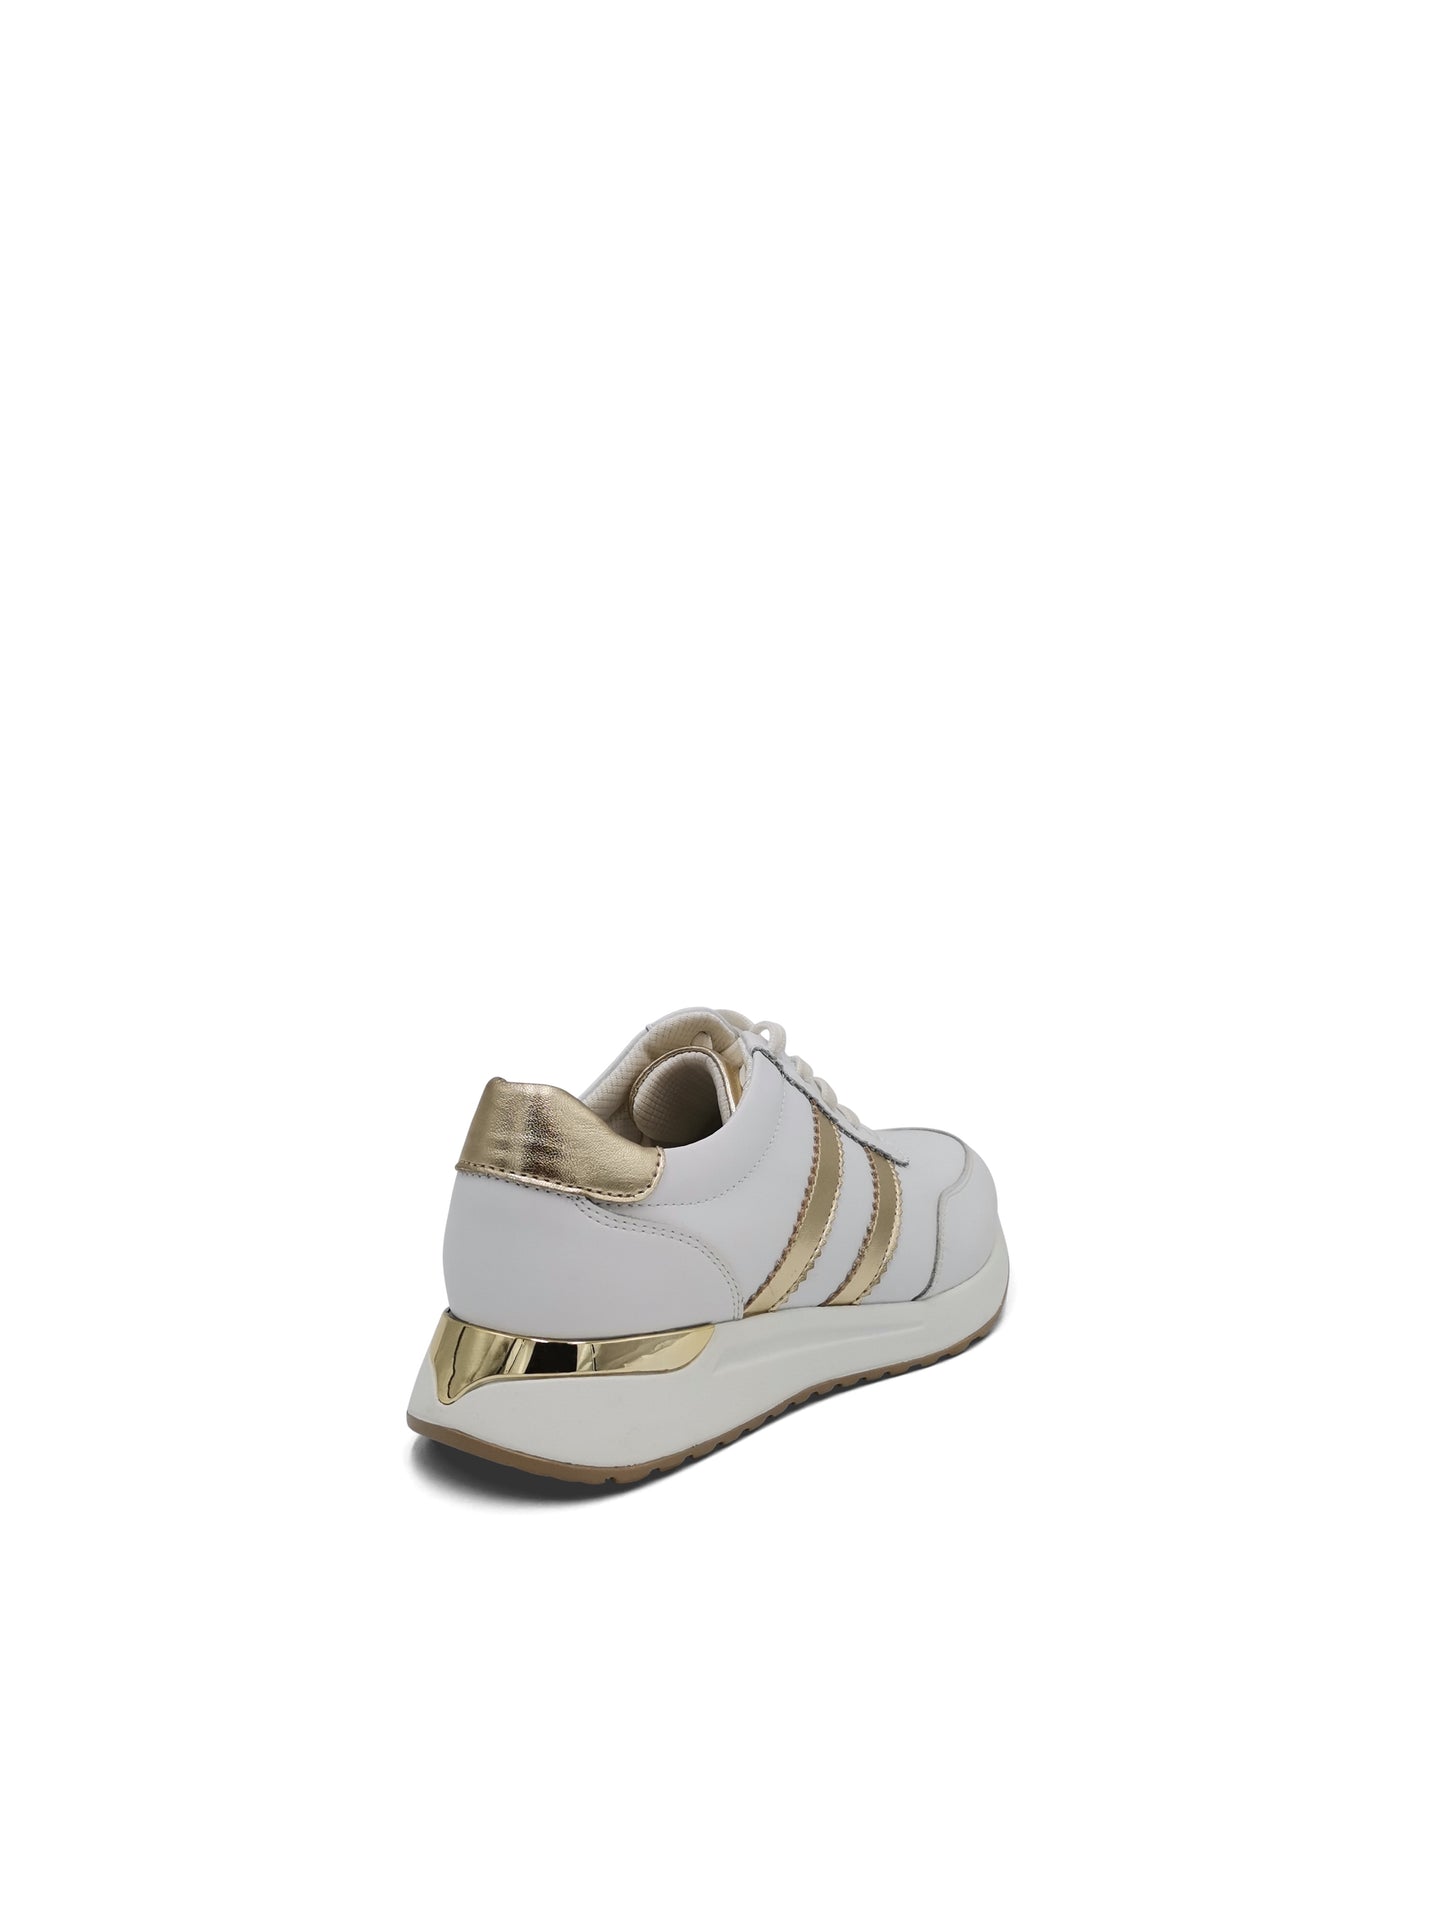 Paxton Sneaker White & Gold